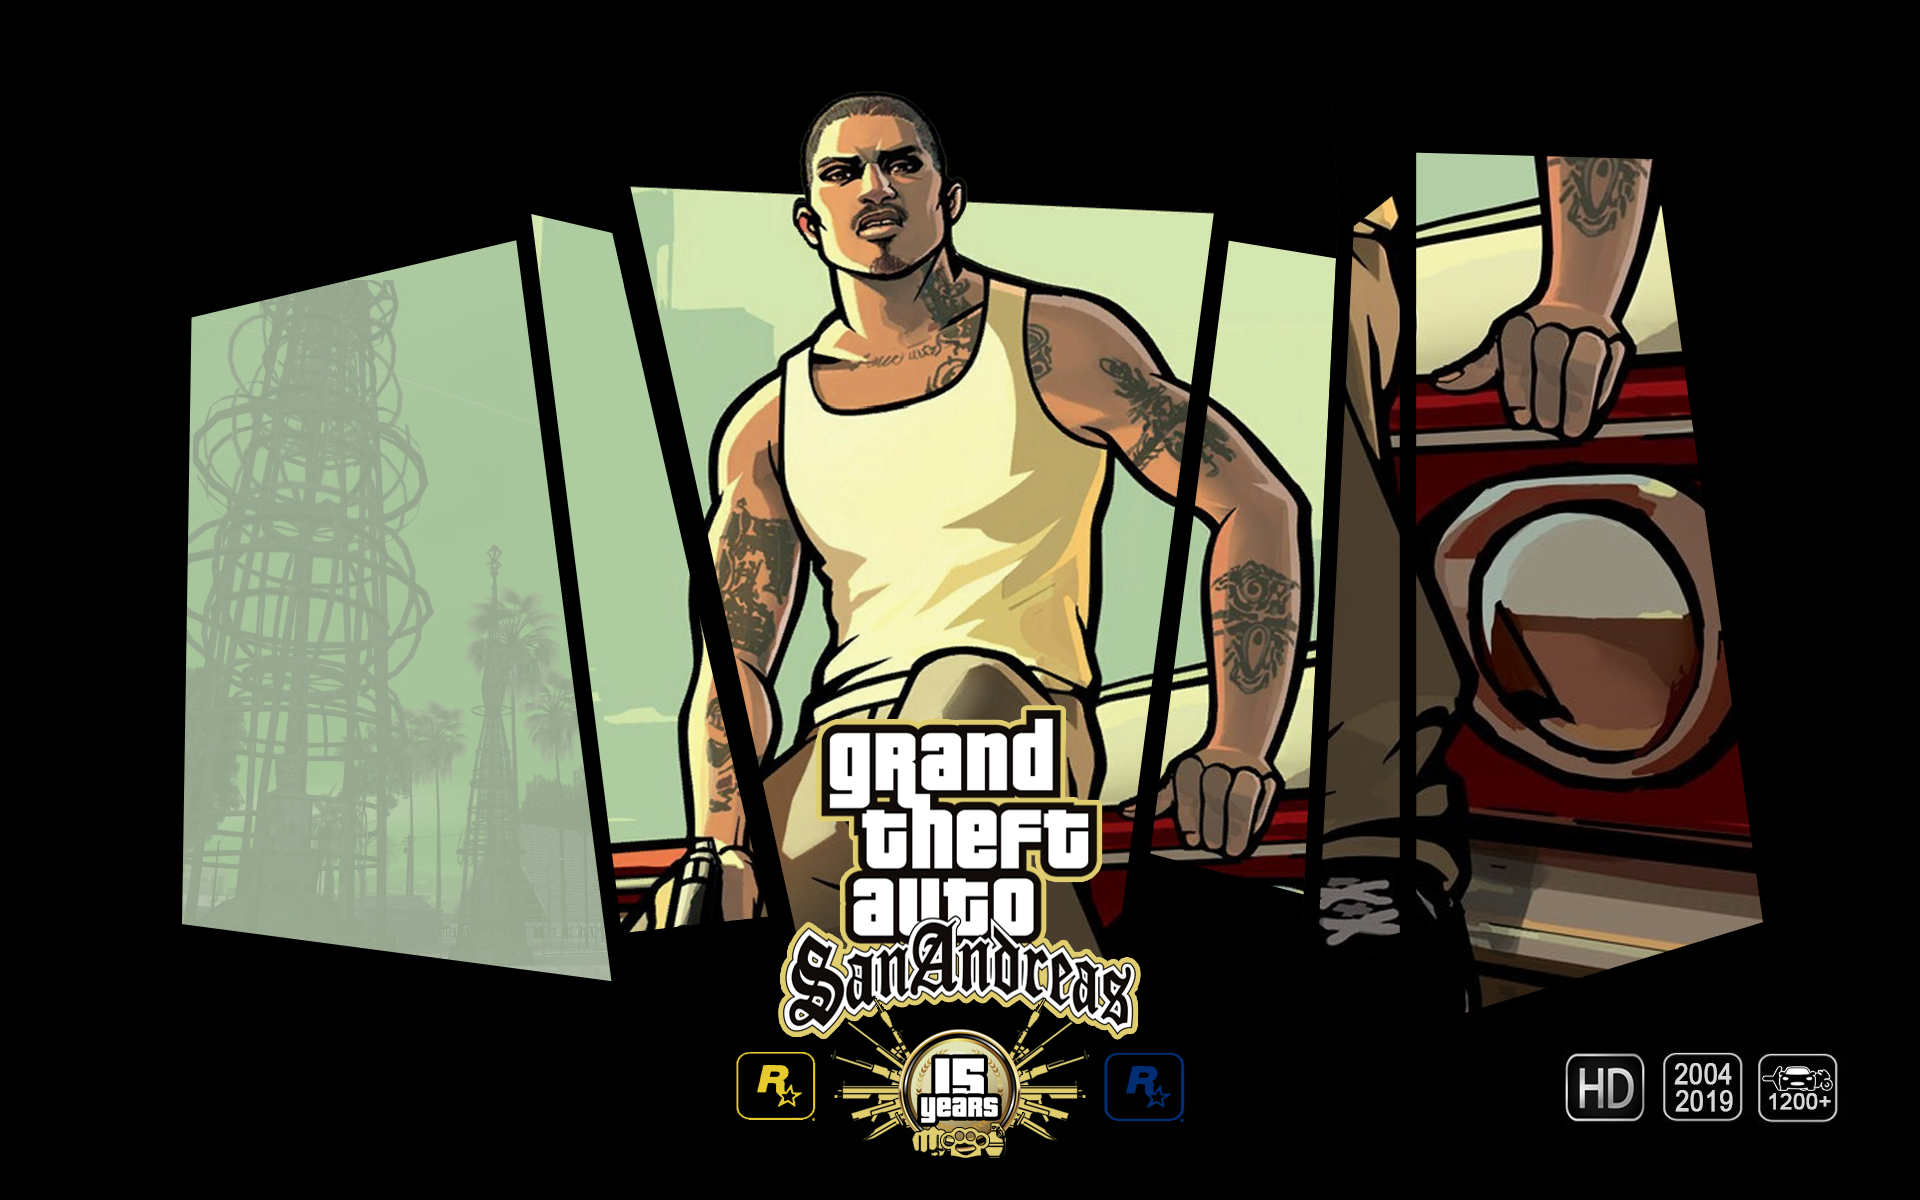 Grand Theft Auto Gta San Andreas Games Posters Gta Anniversary Video Games Wallpaper Resolution 19x10 Id Wallha Com